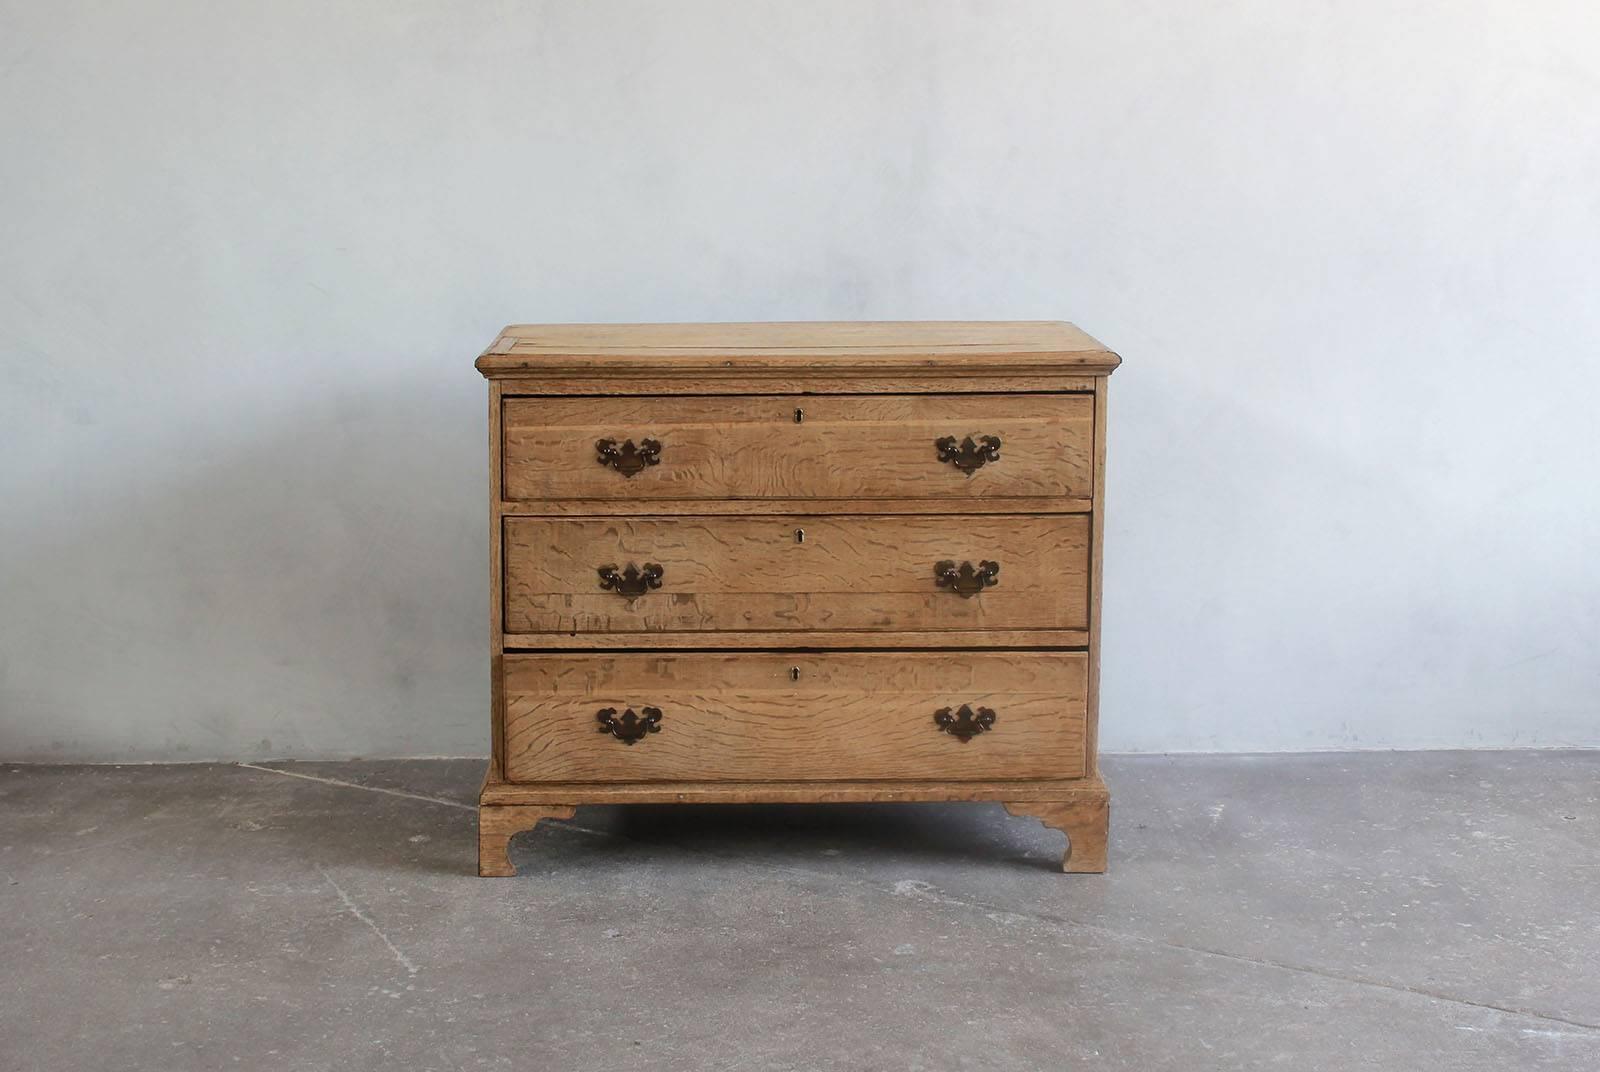 Queen Ann style burled wood three-drawer dresser with brass pulls.